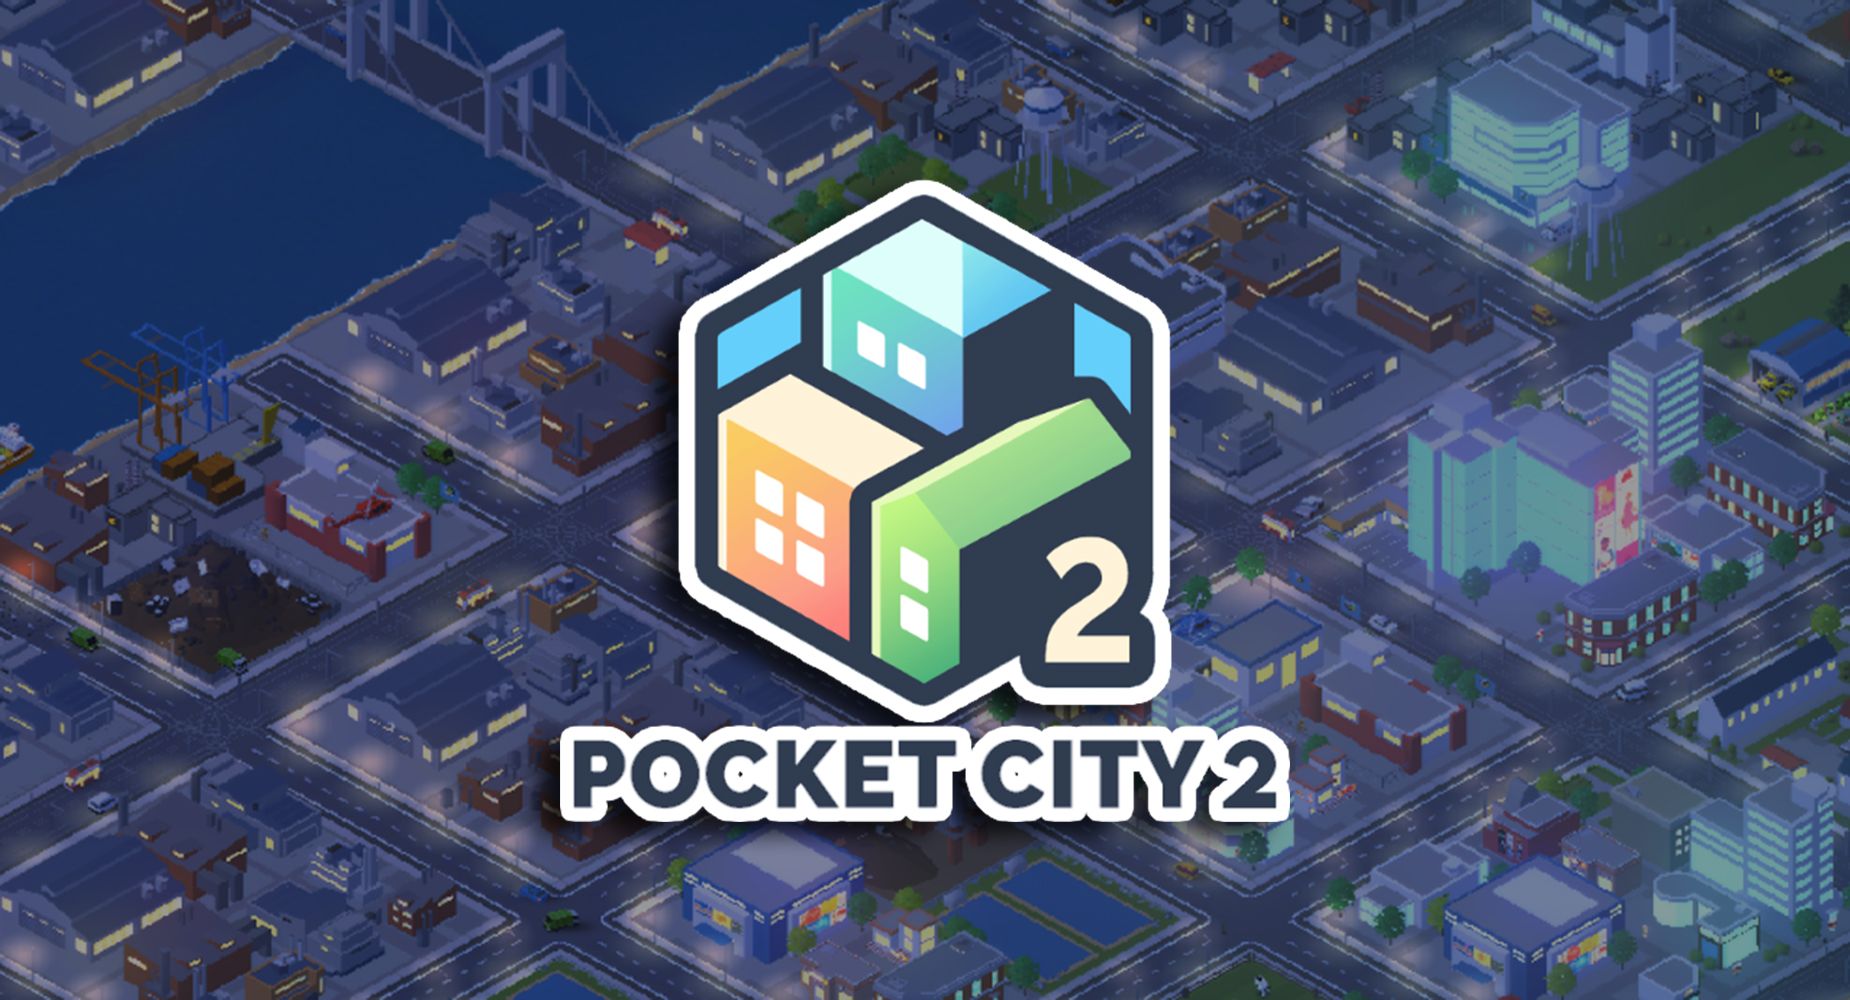 Pocket City 2 logo overlaid on a screenshot of the game